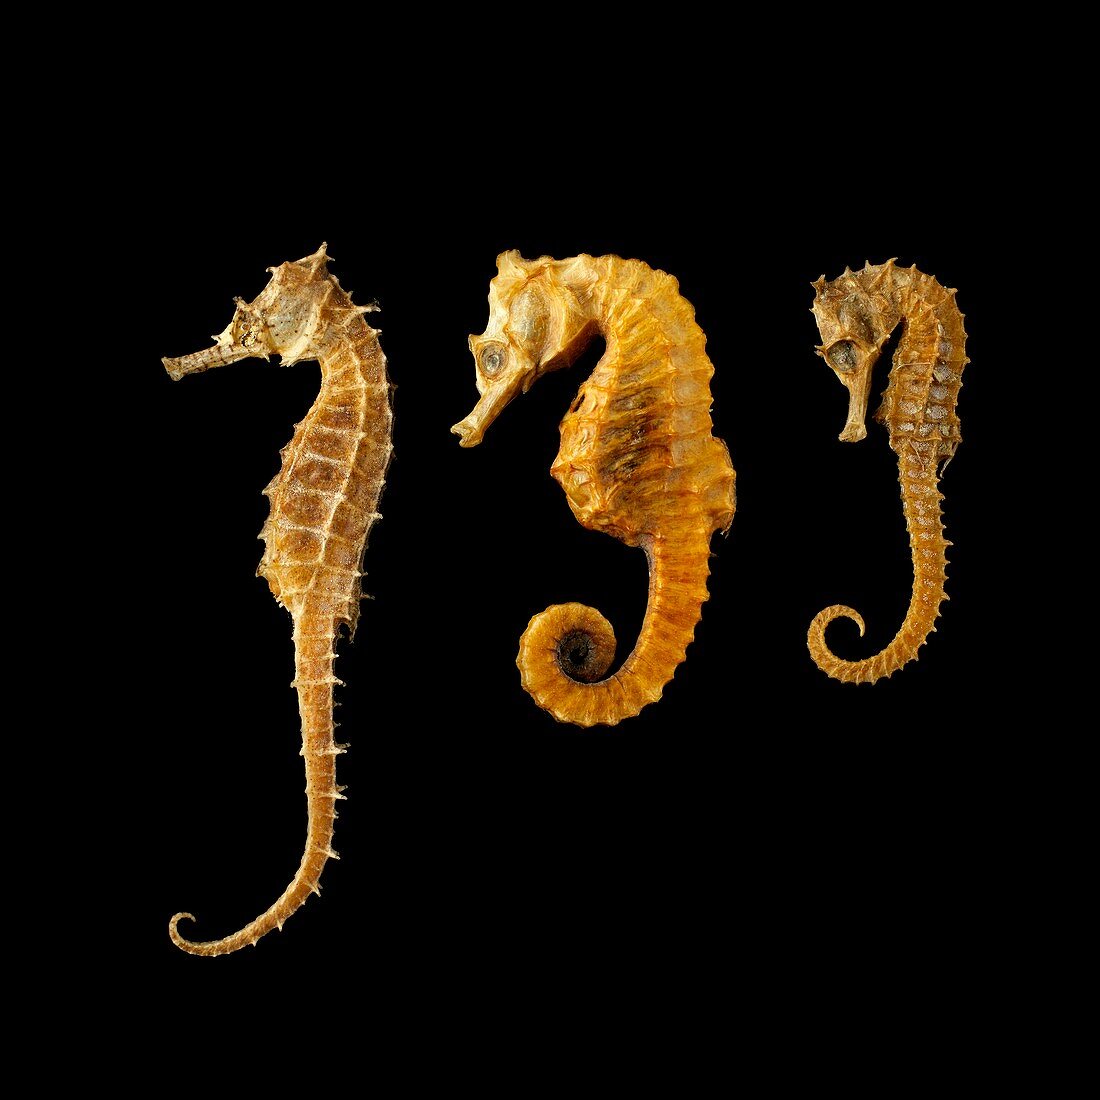 Three seahorses against black background